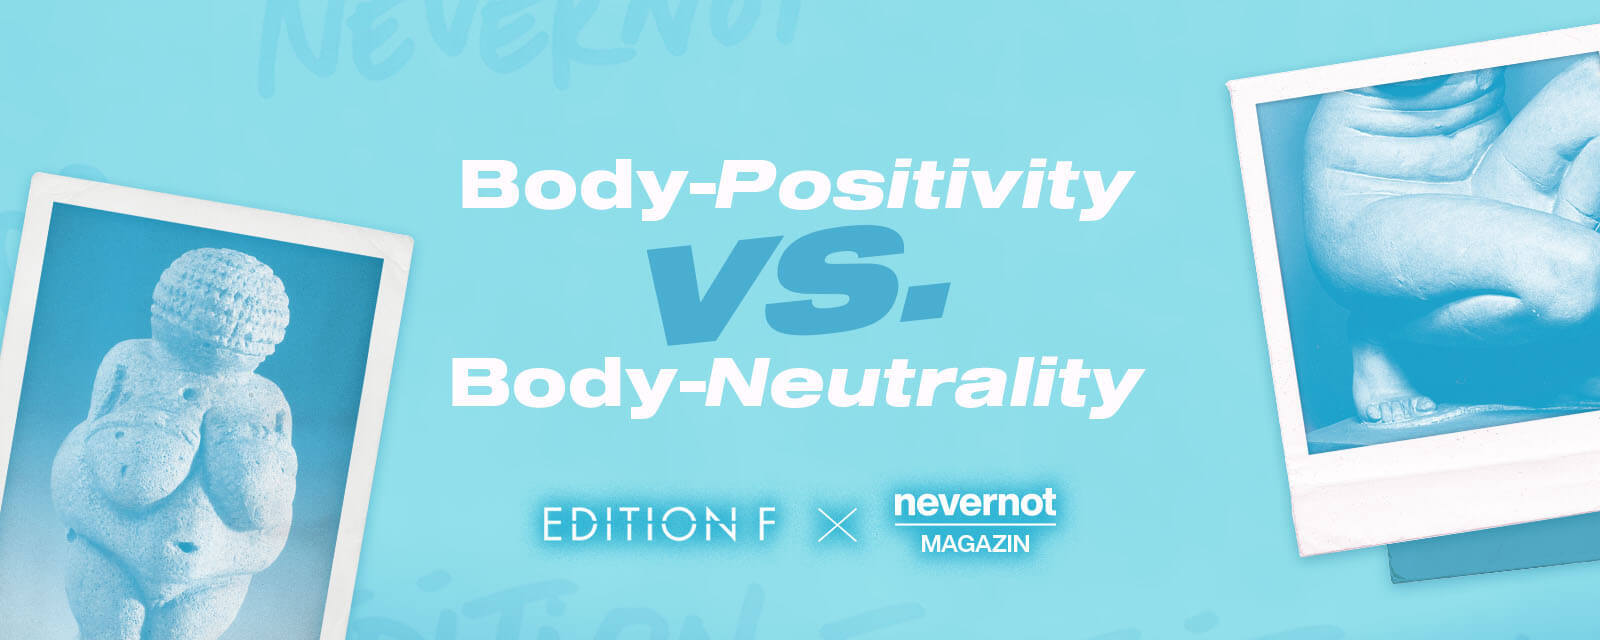 Body-Positivity vs. Body-Neutrality